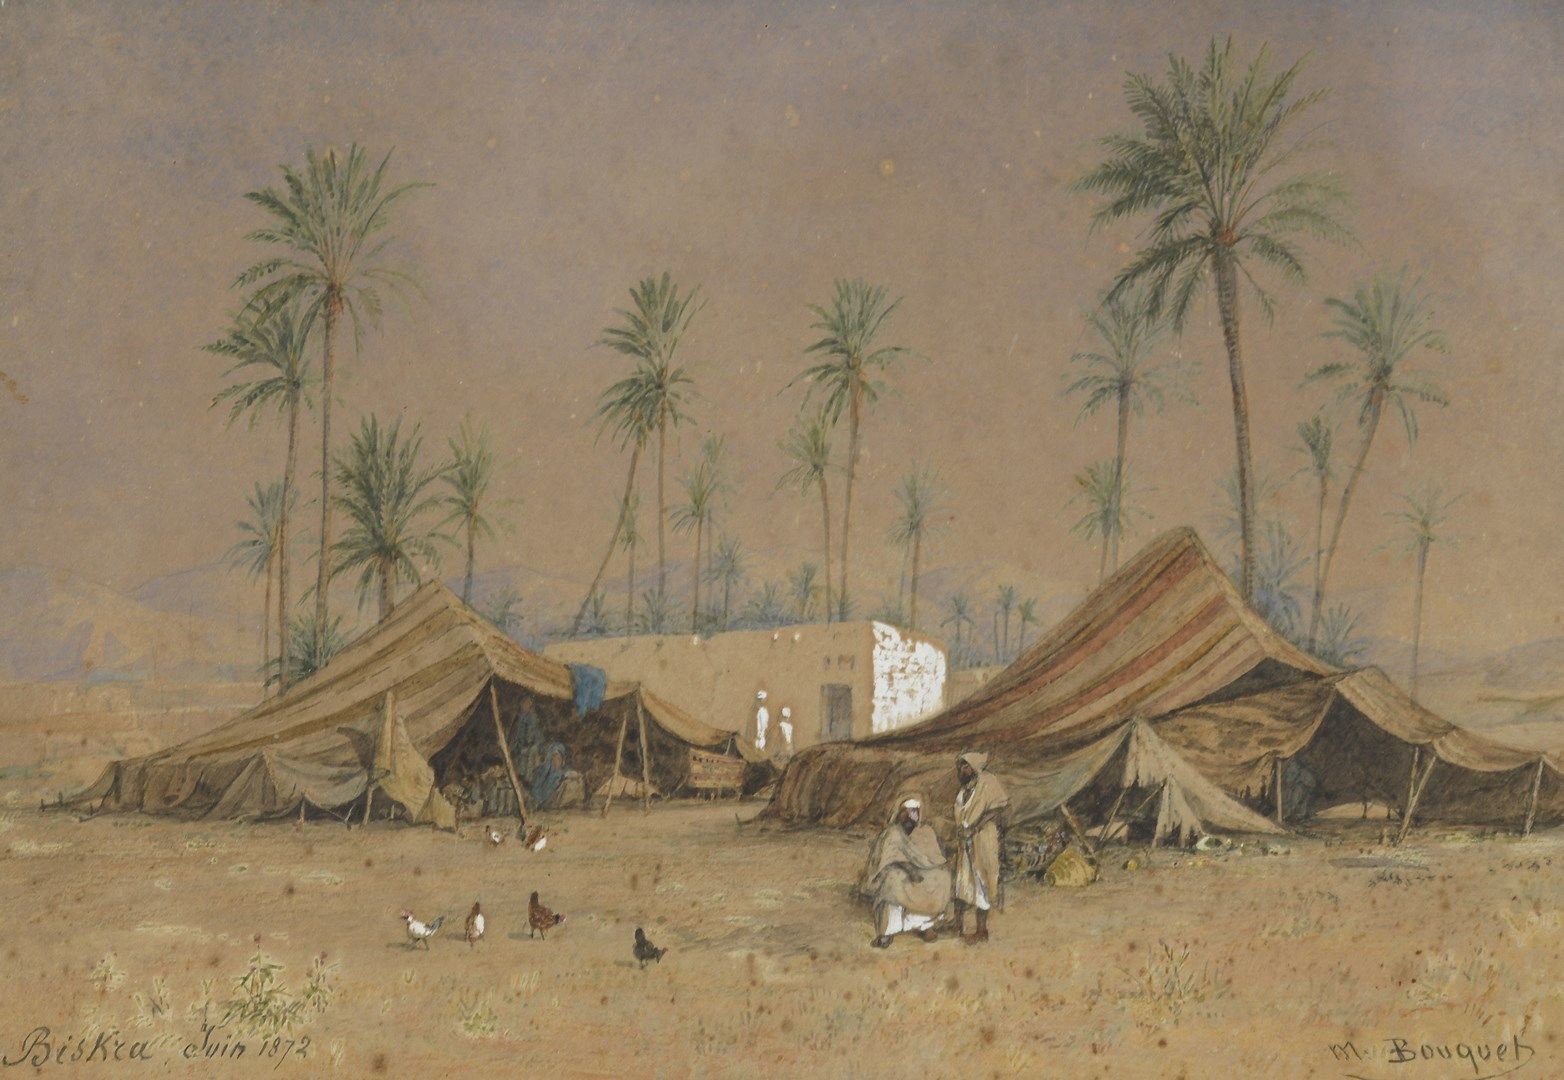 Null BOUQUET Michel, 1807-1890

Encampment in Biskra, June 1872

watercolor and &hellip;